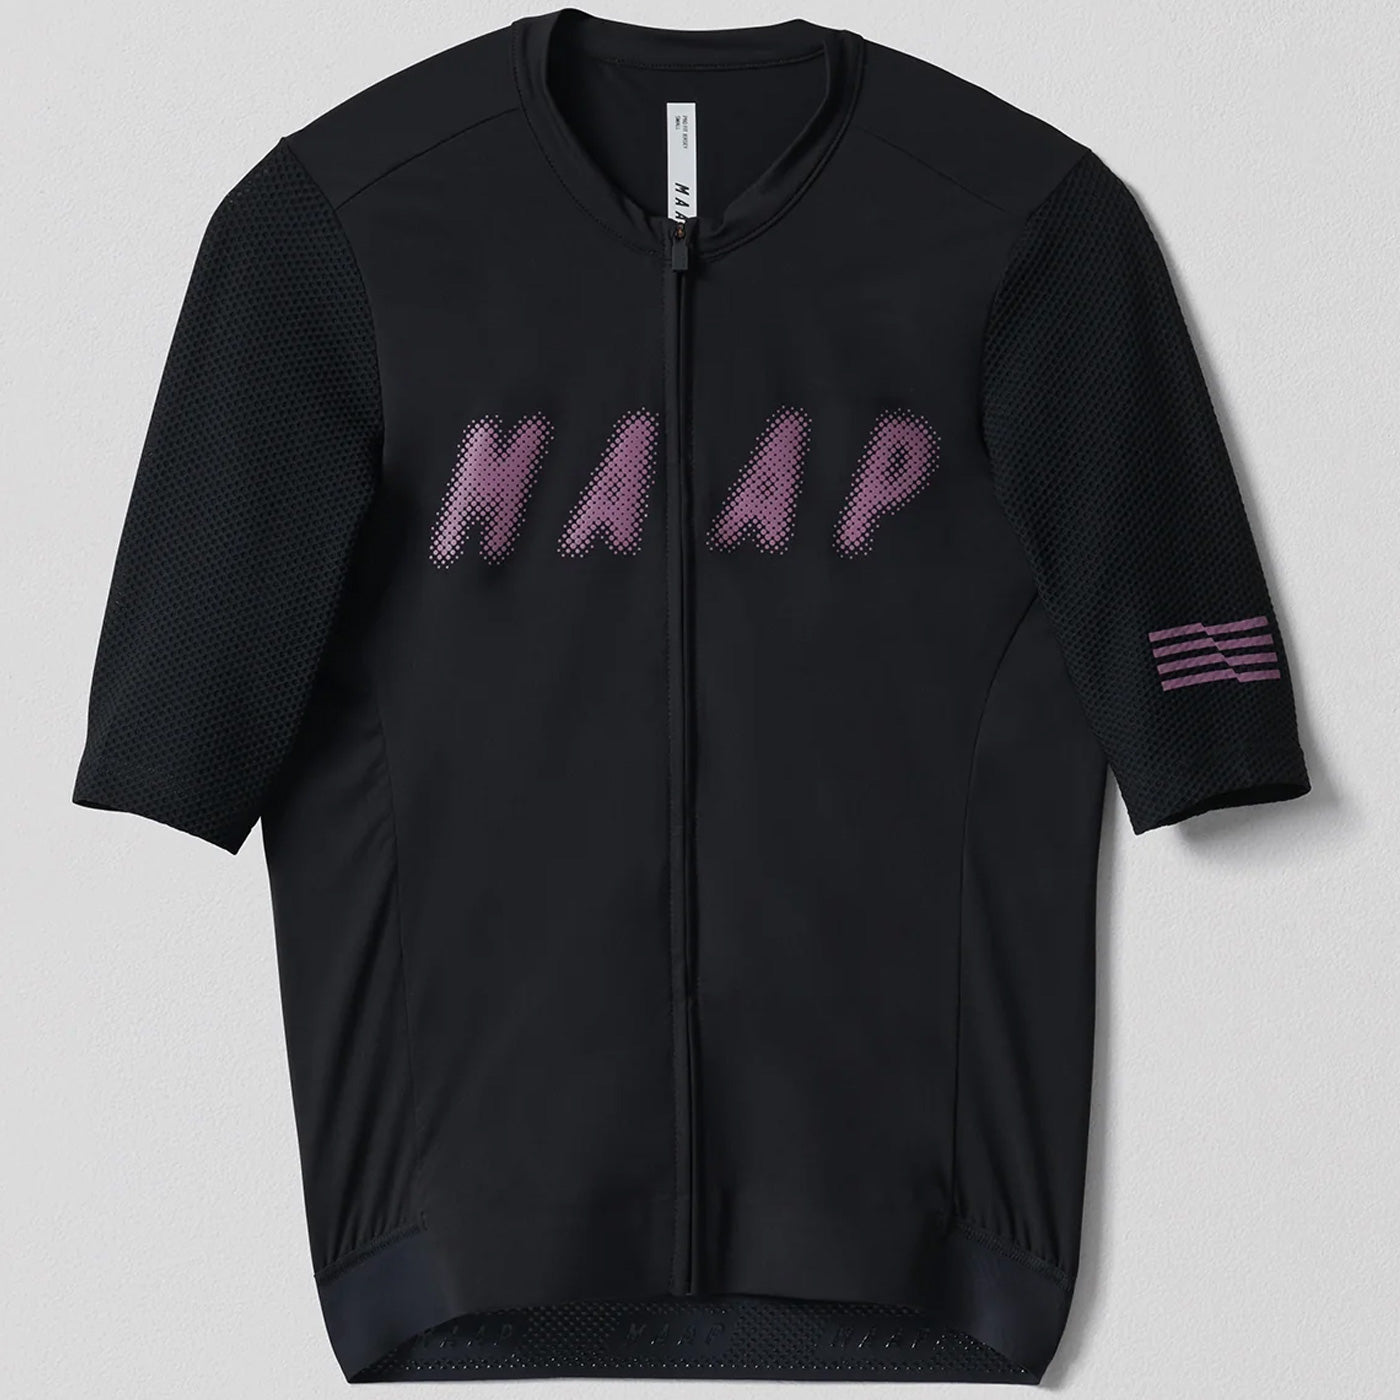 Maap Halftone Pro Base jersey - Black | All4cycling